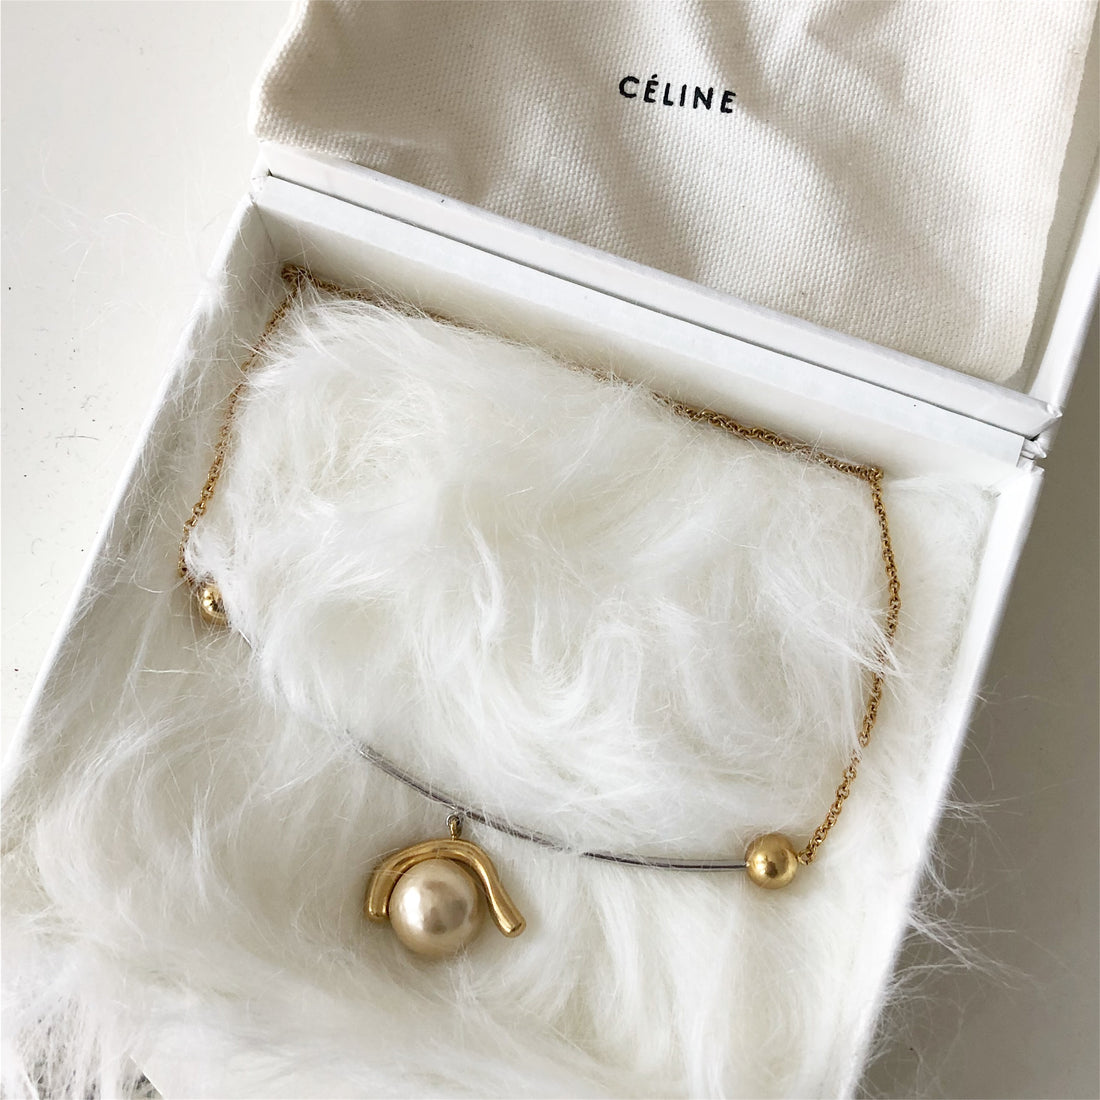 Celine Geometric Modernist Pearl Pendant Necklace